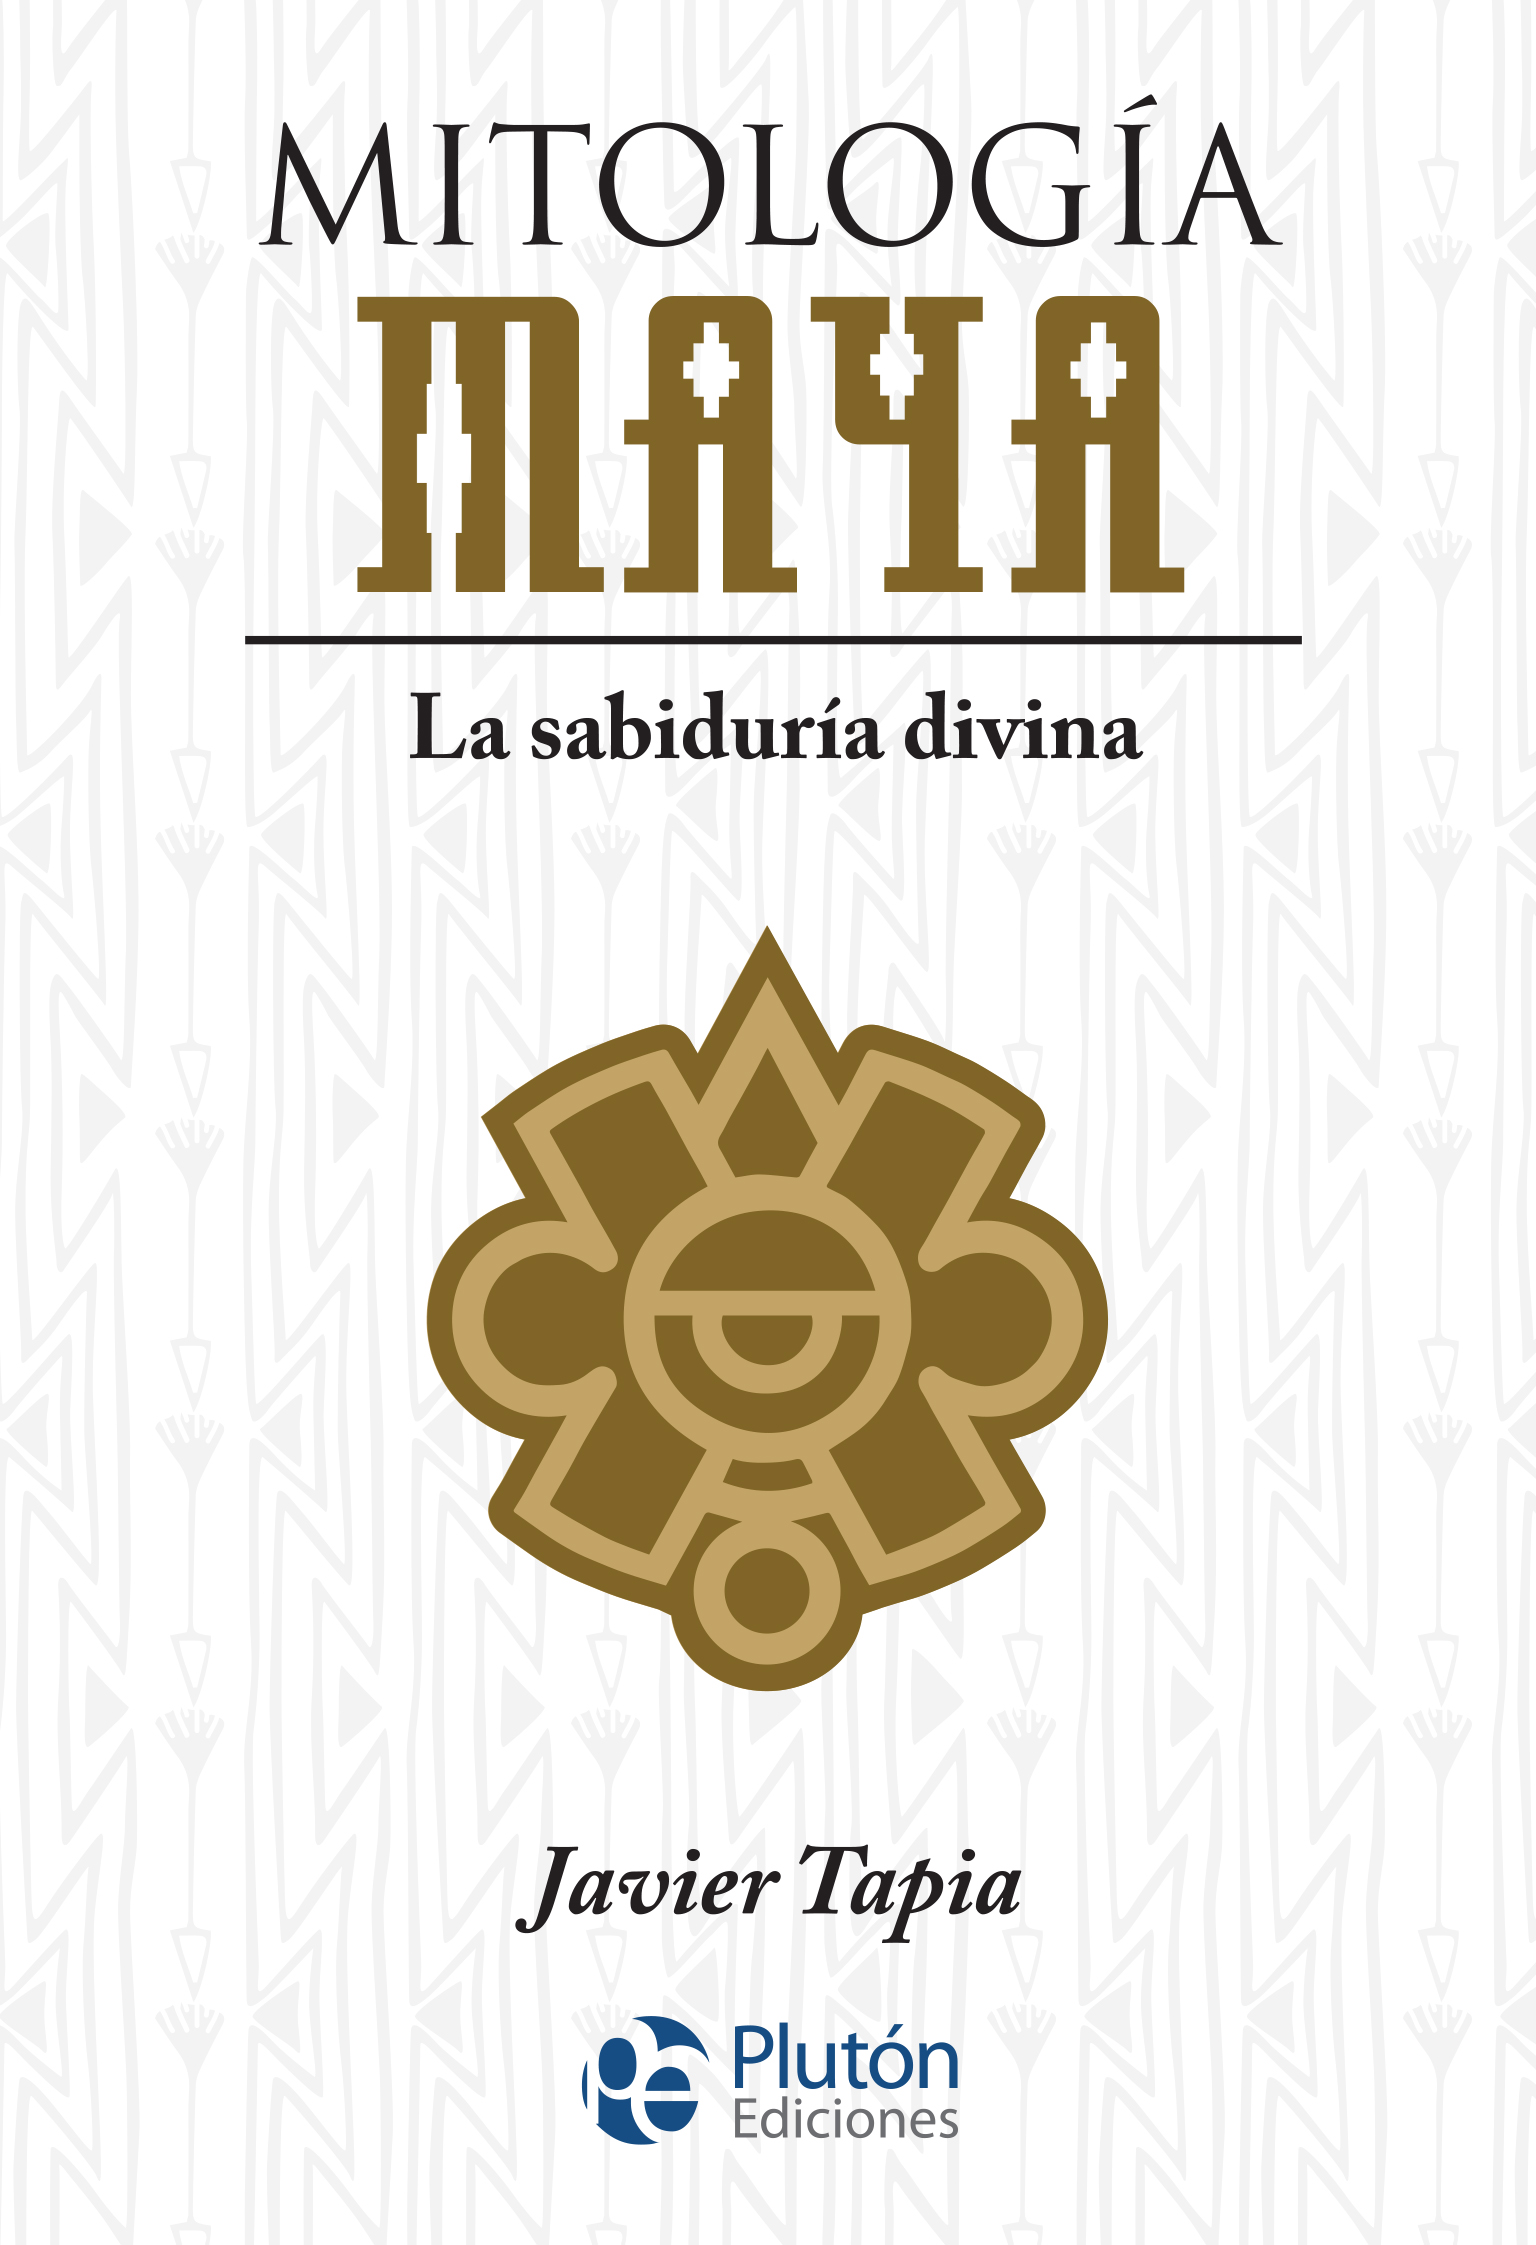 cover_-_Mitologia_Maya_-_MYTHOS_2019_-_Maqueta_-_PLASTIFICADO_MATE.jpg